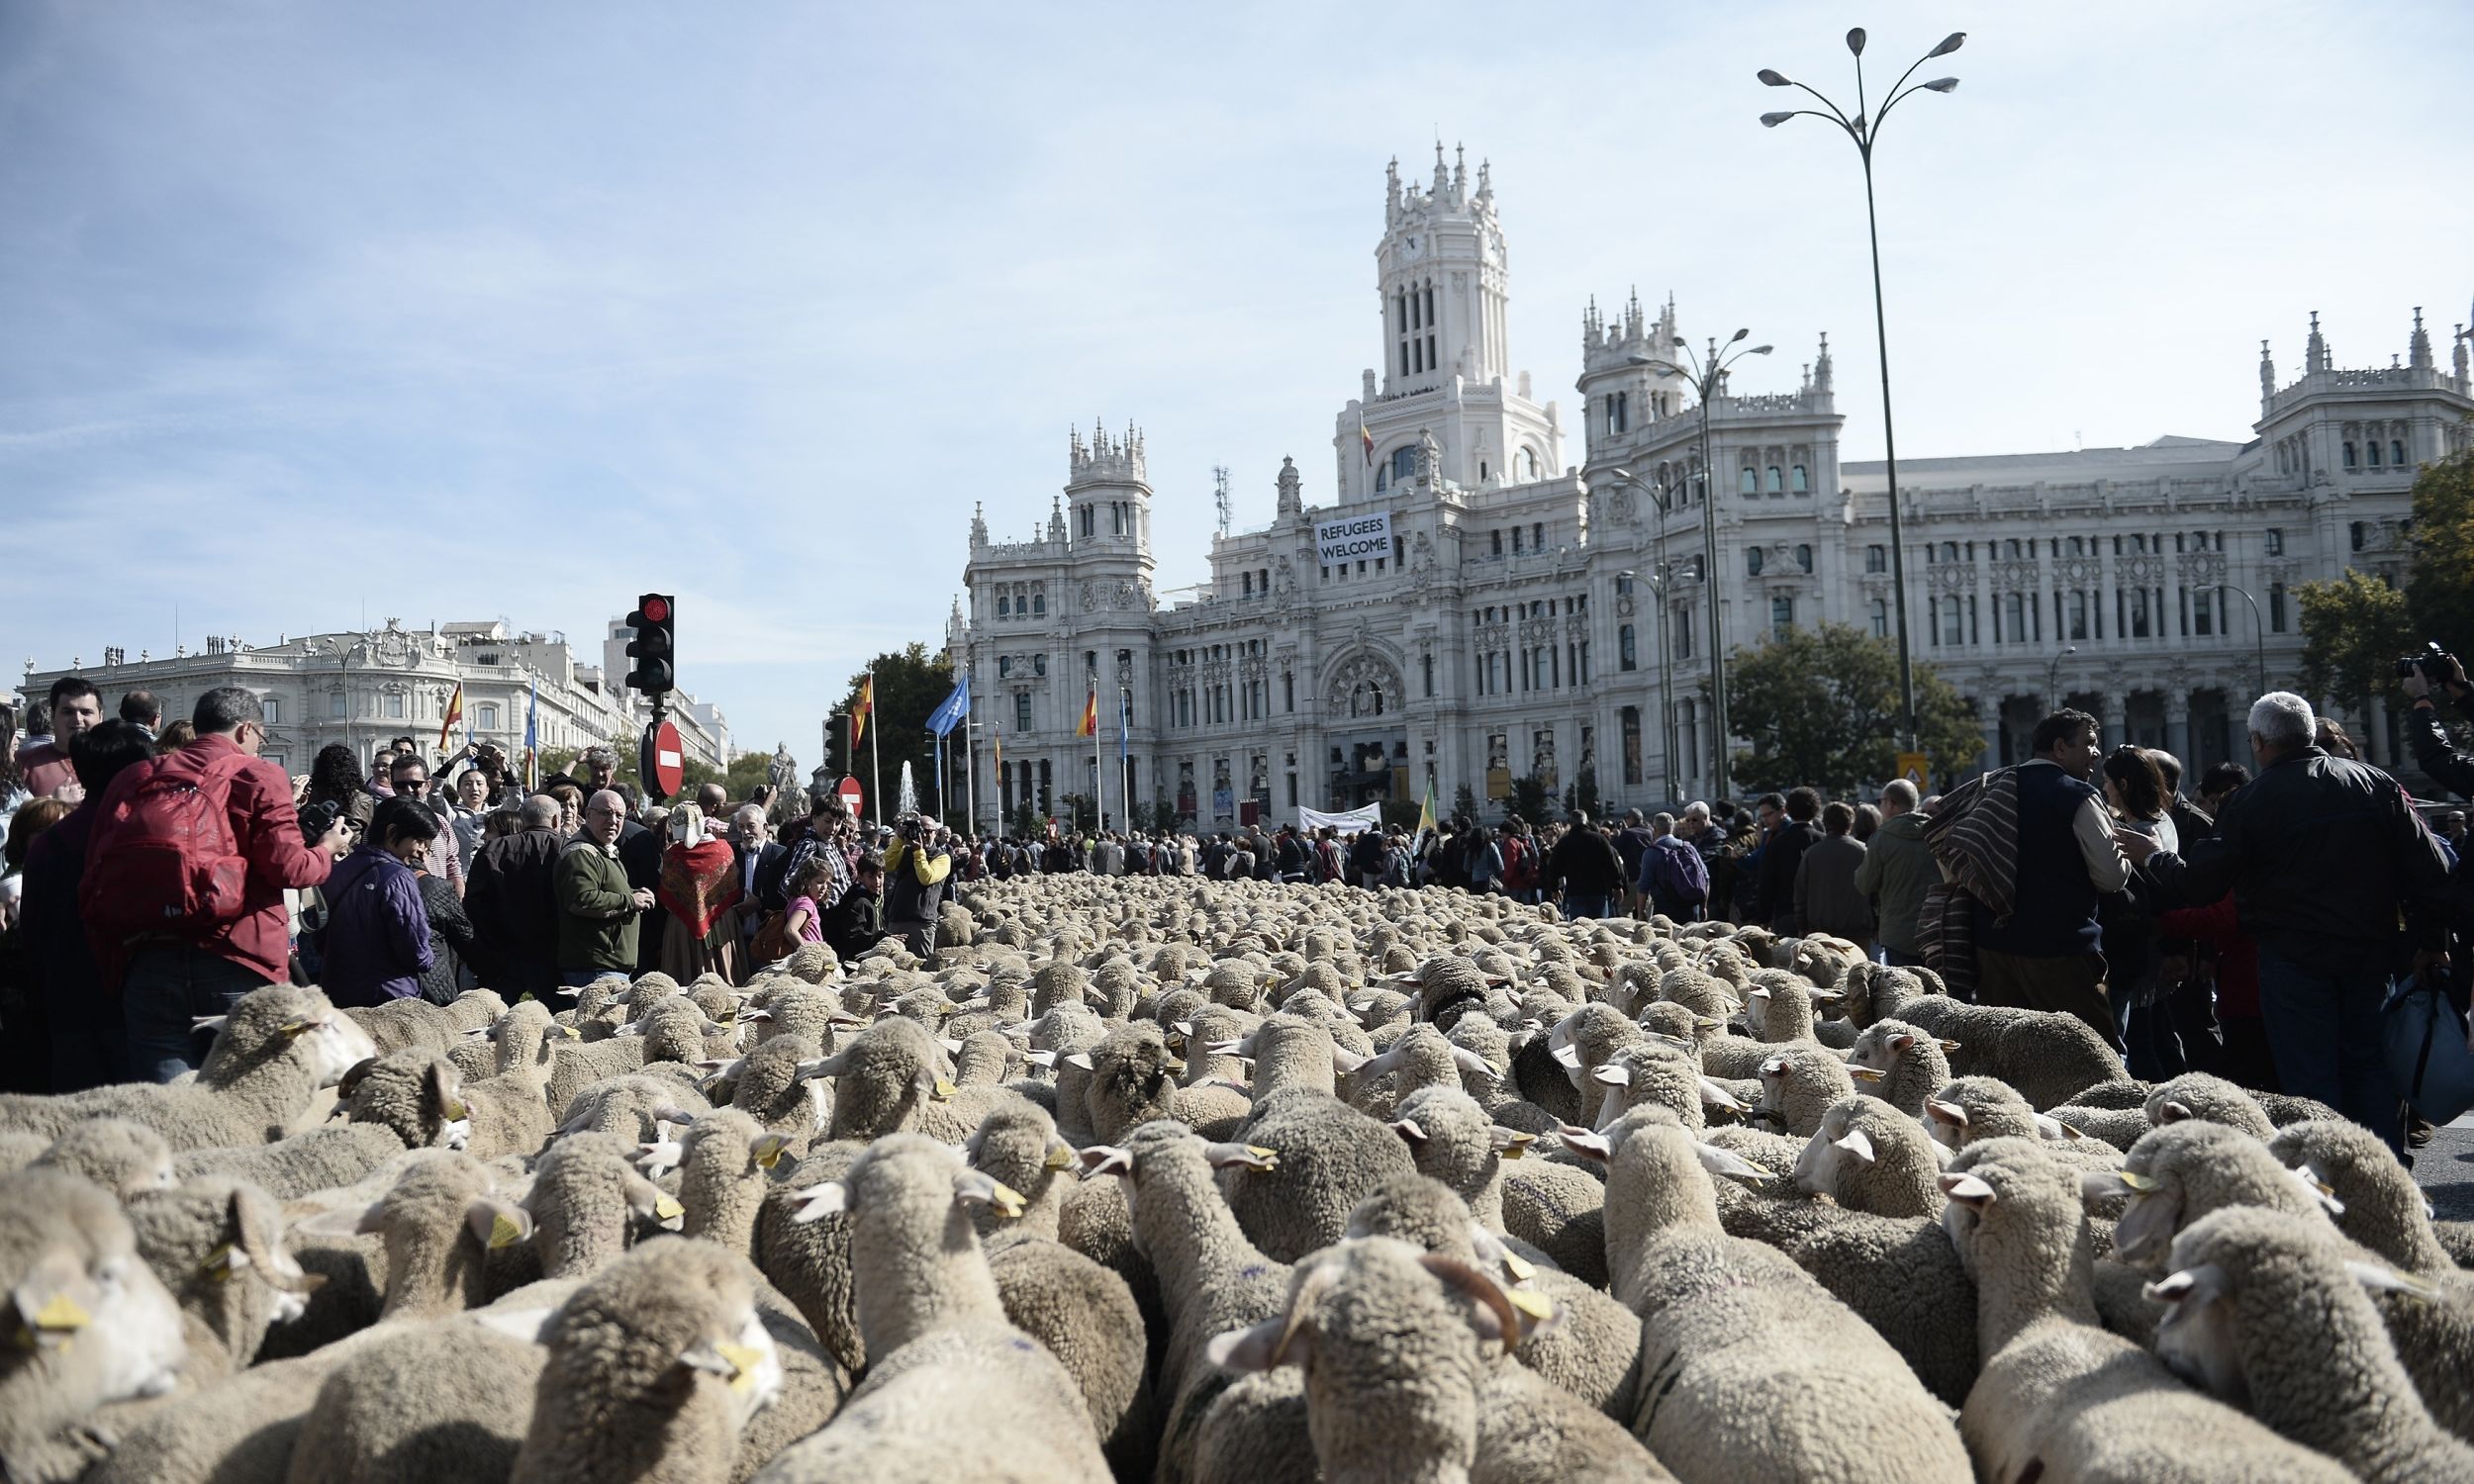 Sheep march through Madrid in October 2015. Photo by Burak Akbulut/Anadolu Agency/Getty Images